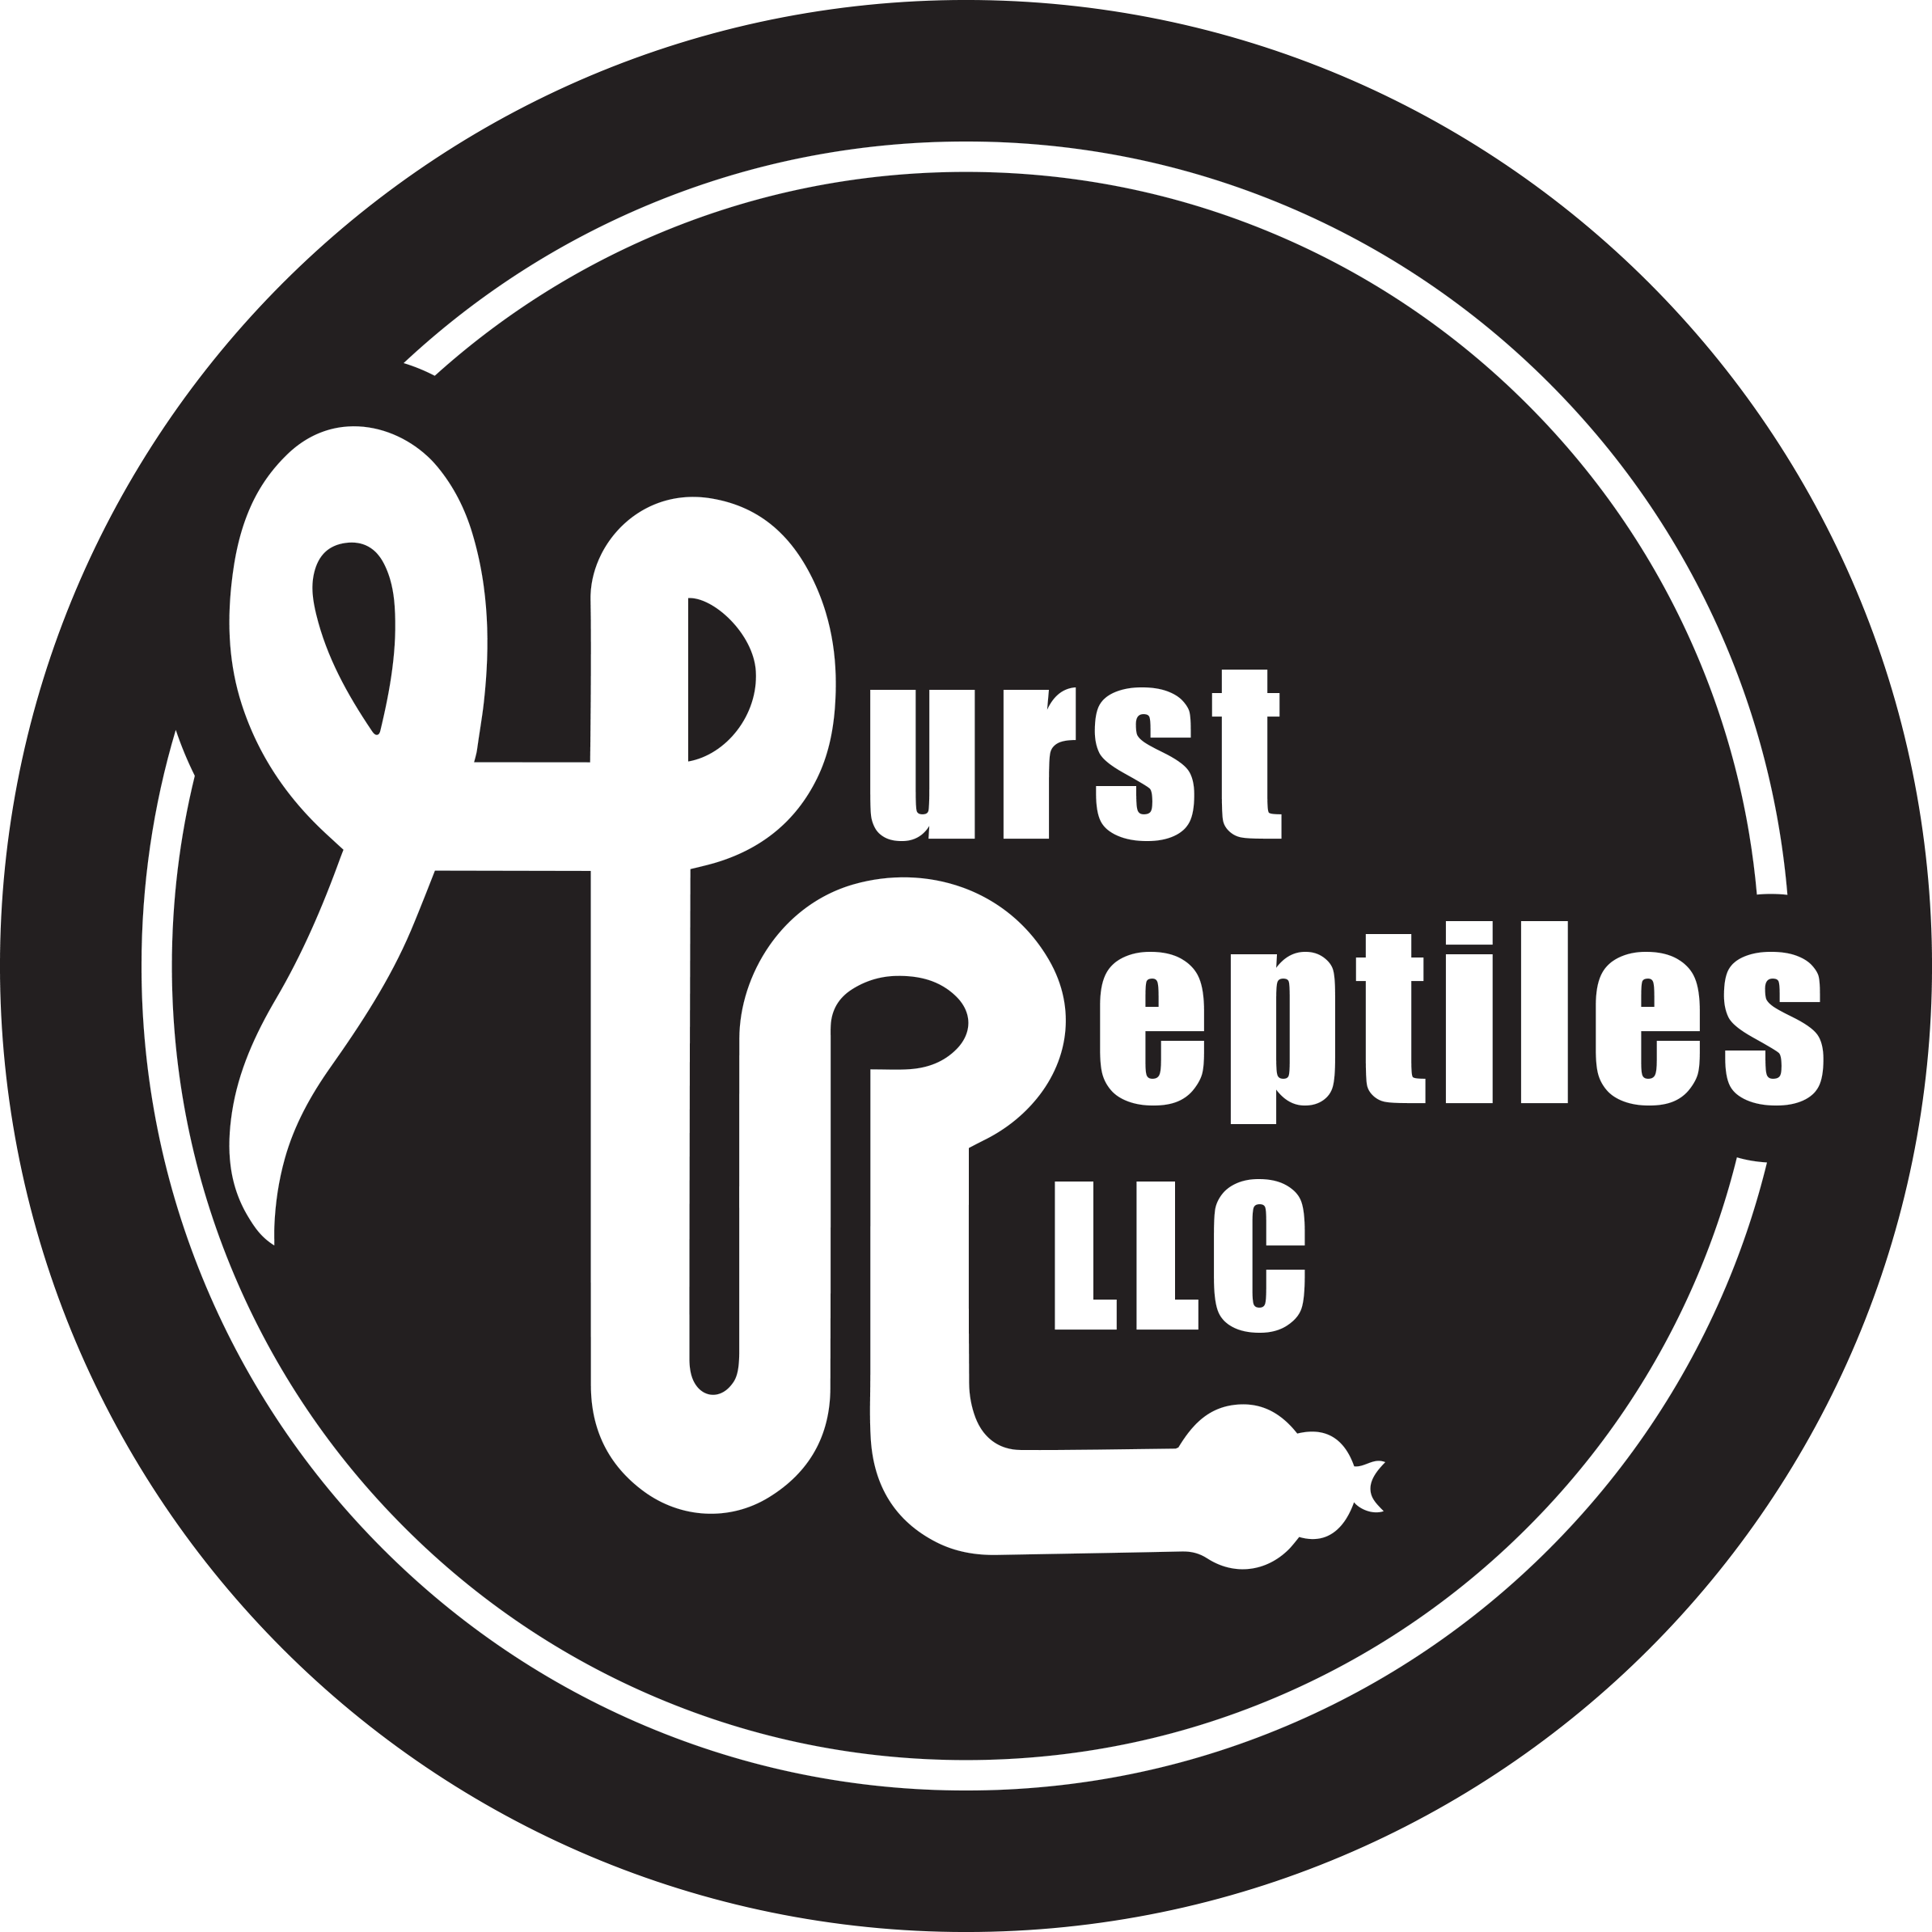 Hurst Reptiles LLC